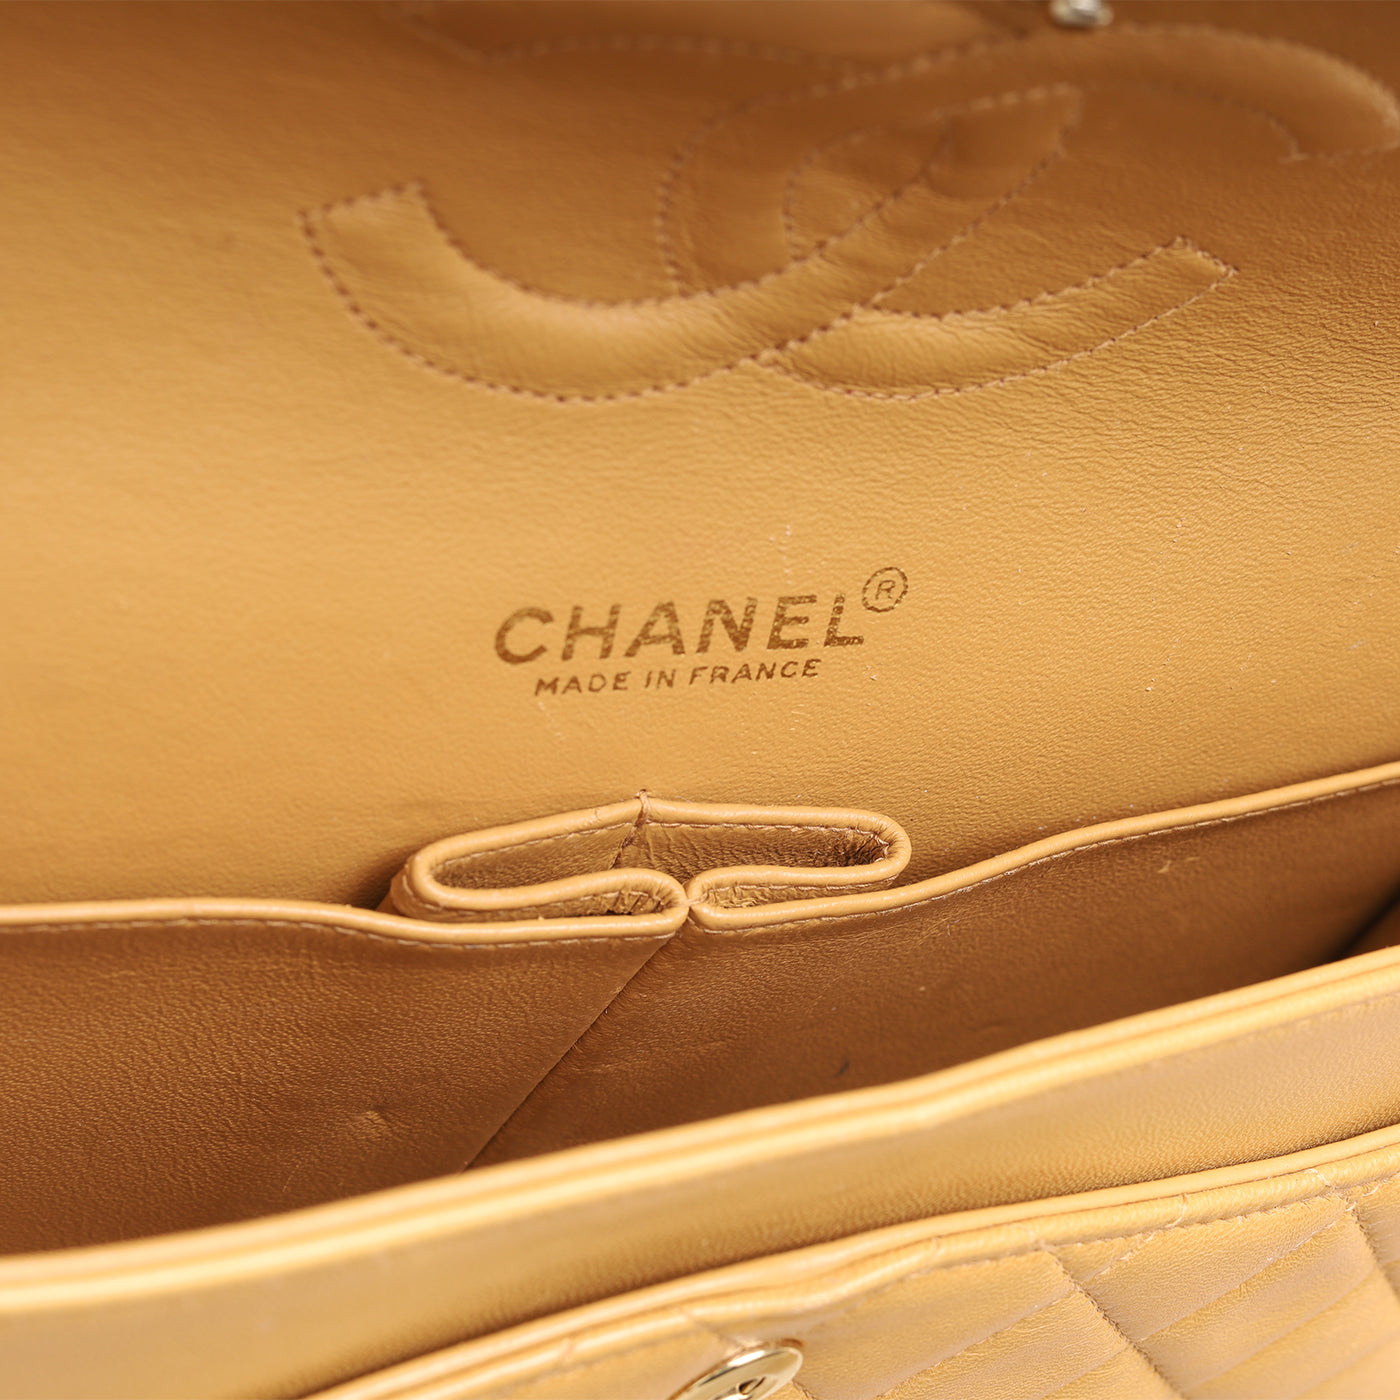 Chanel - Classic Flap Bag - Medium - Beige Lambskin - GHW - Pre